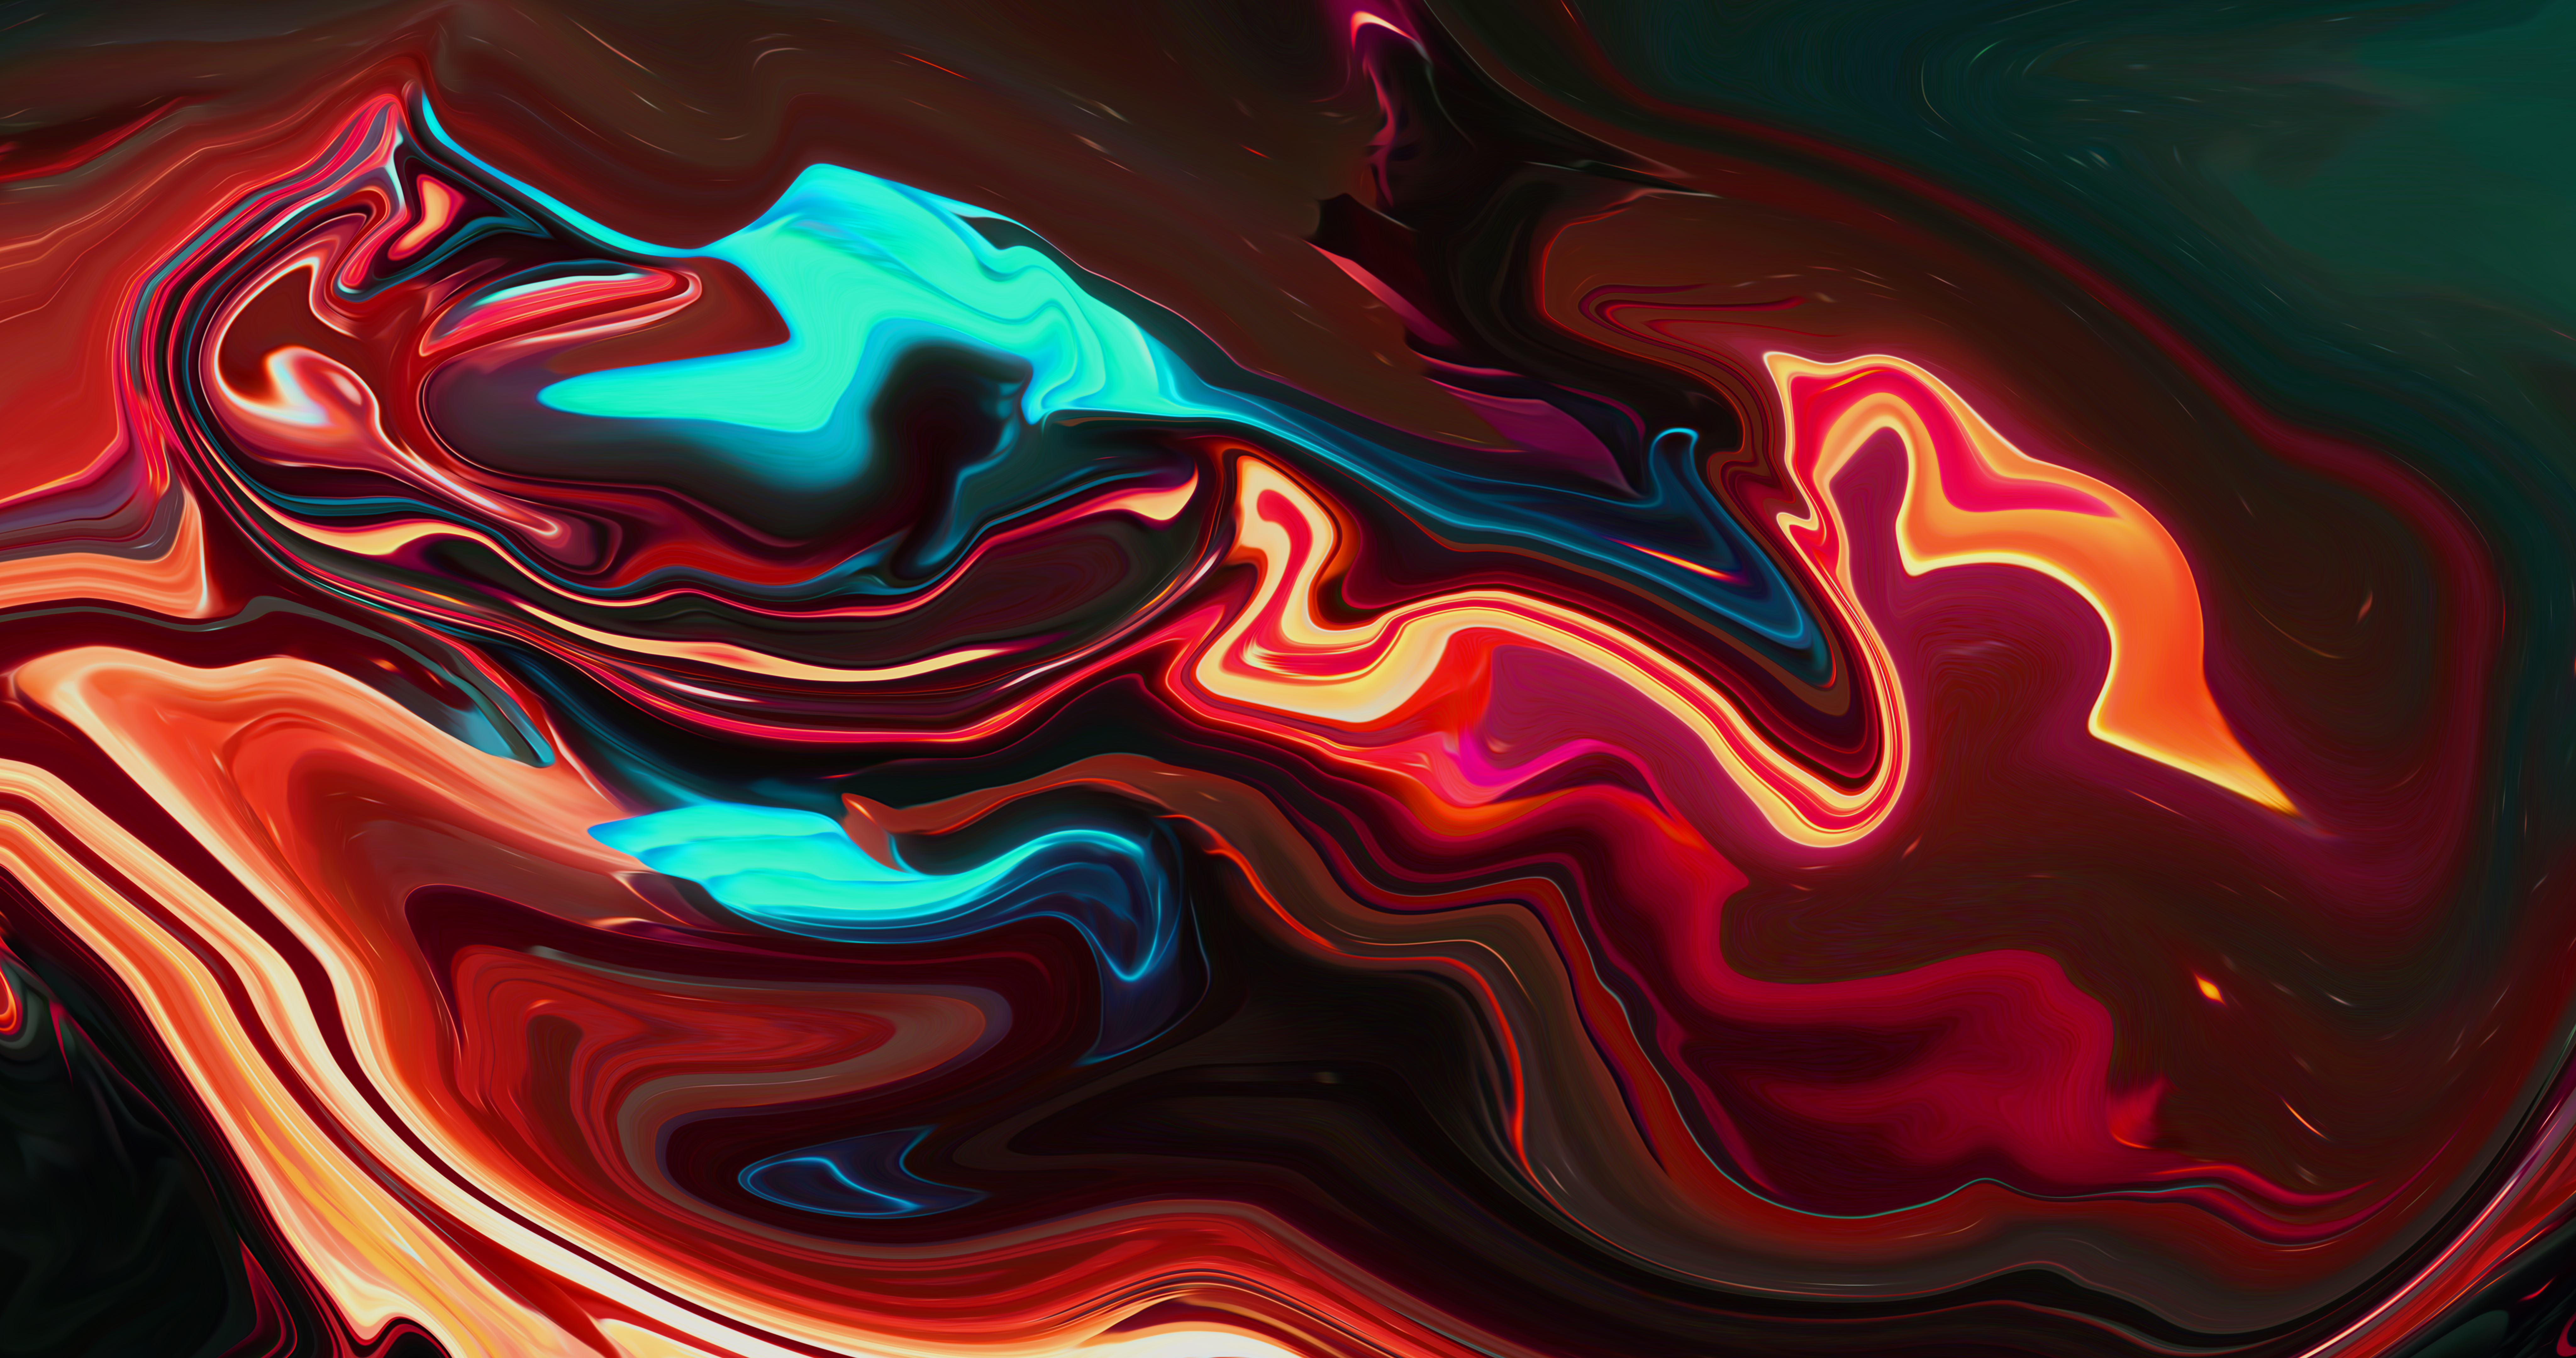 General 8192x4320 abstract shapes fluid liquid artwork digital art paint brushes neon 8 K red volcano